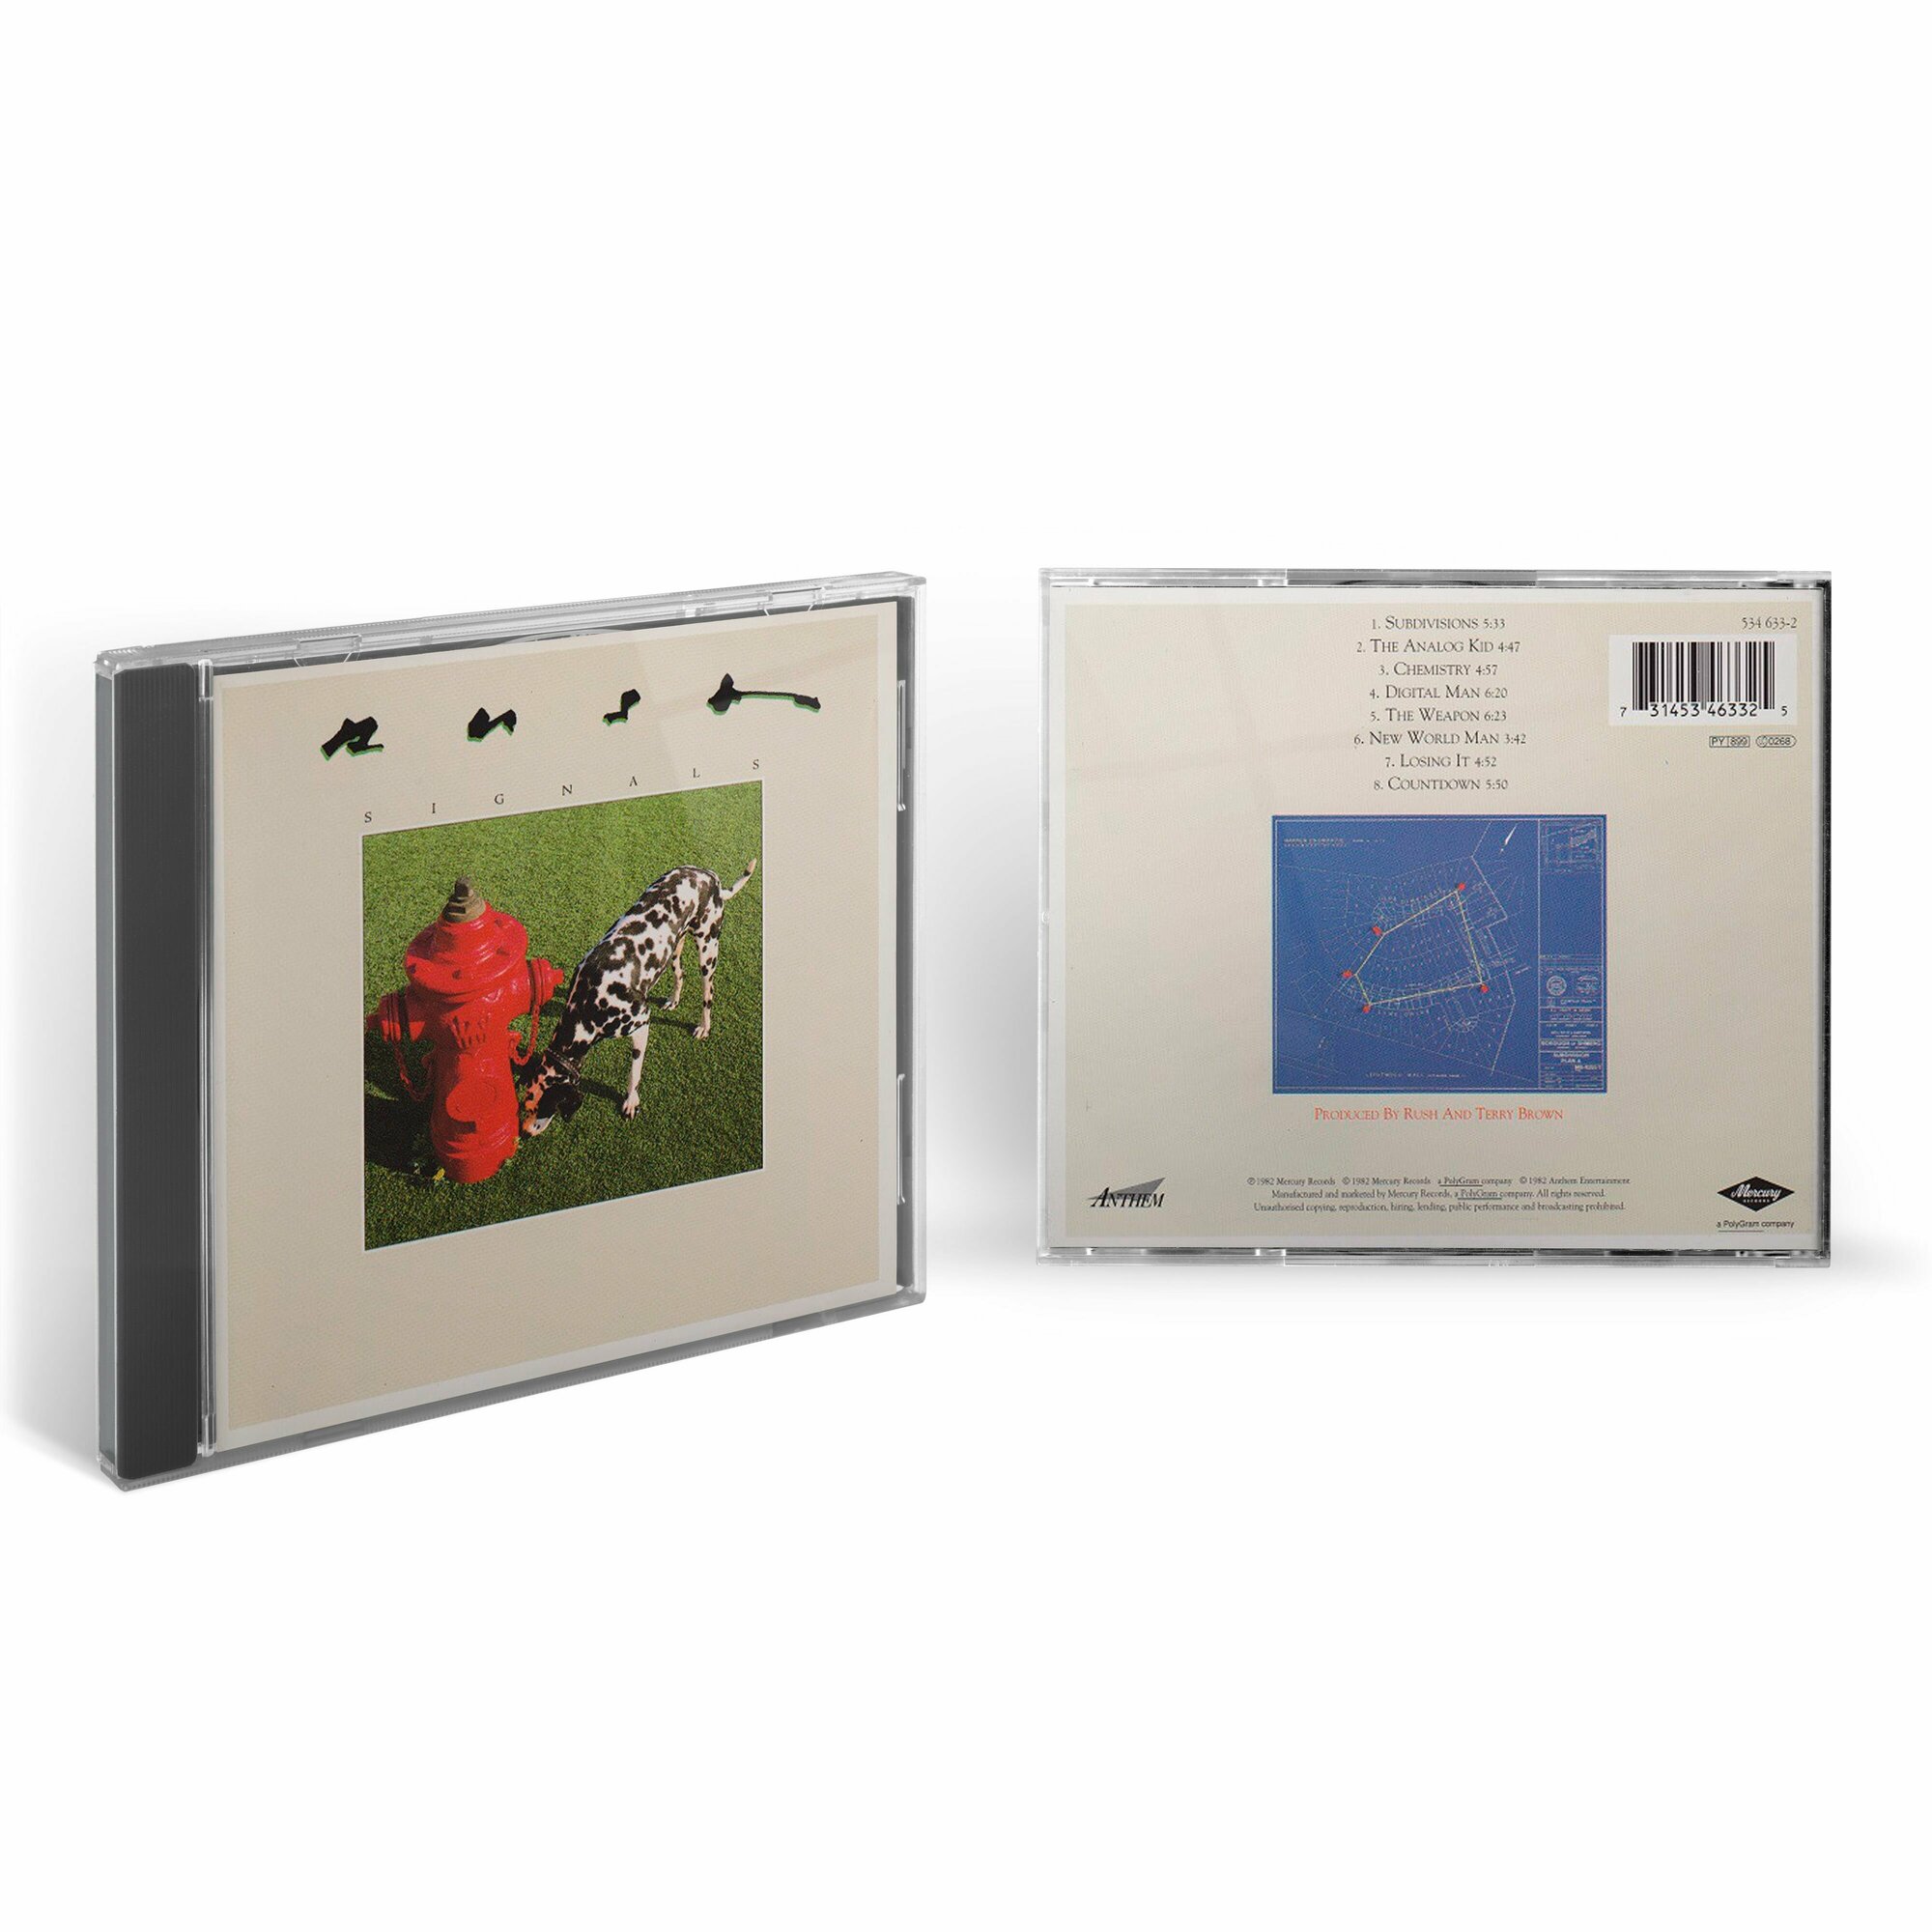 Rush - Signals (1CD) 1997 Jewel Аудио диск